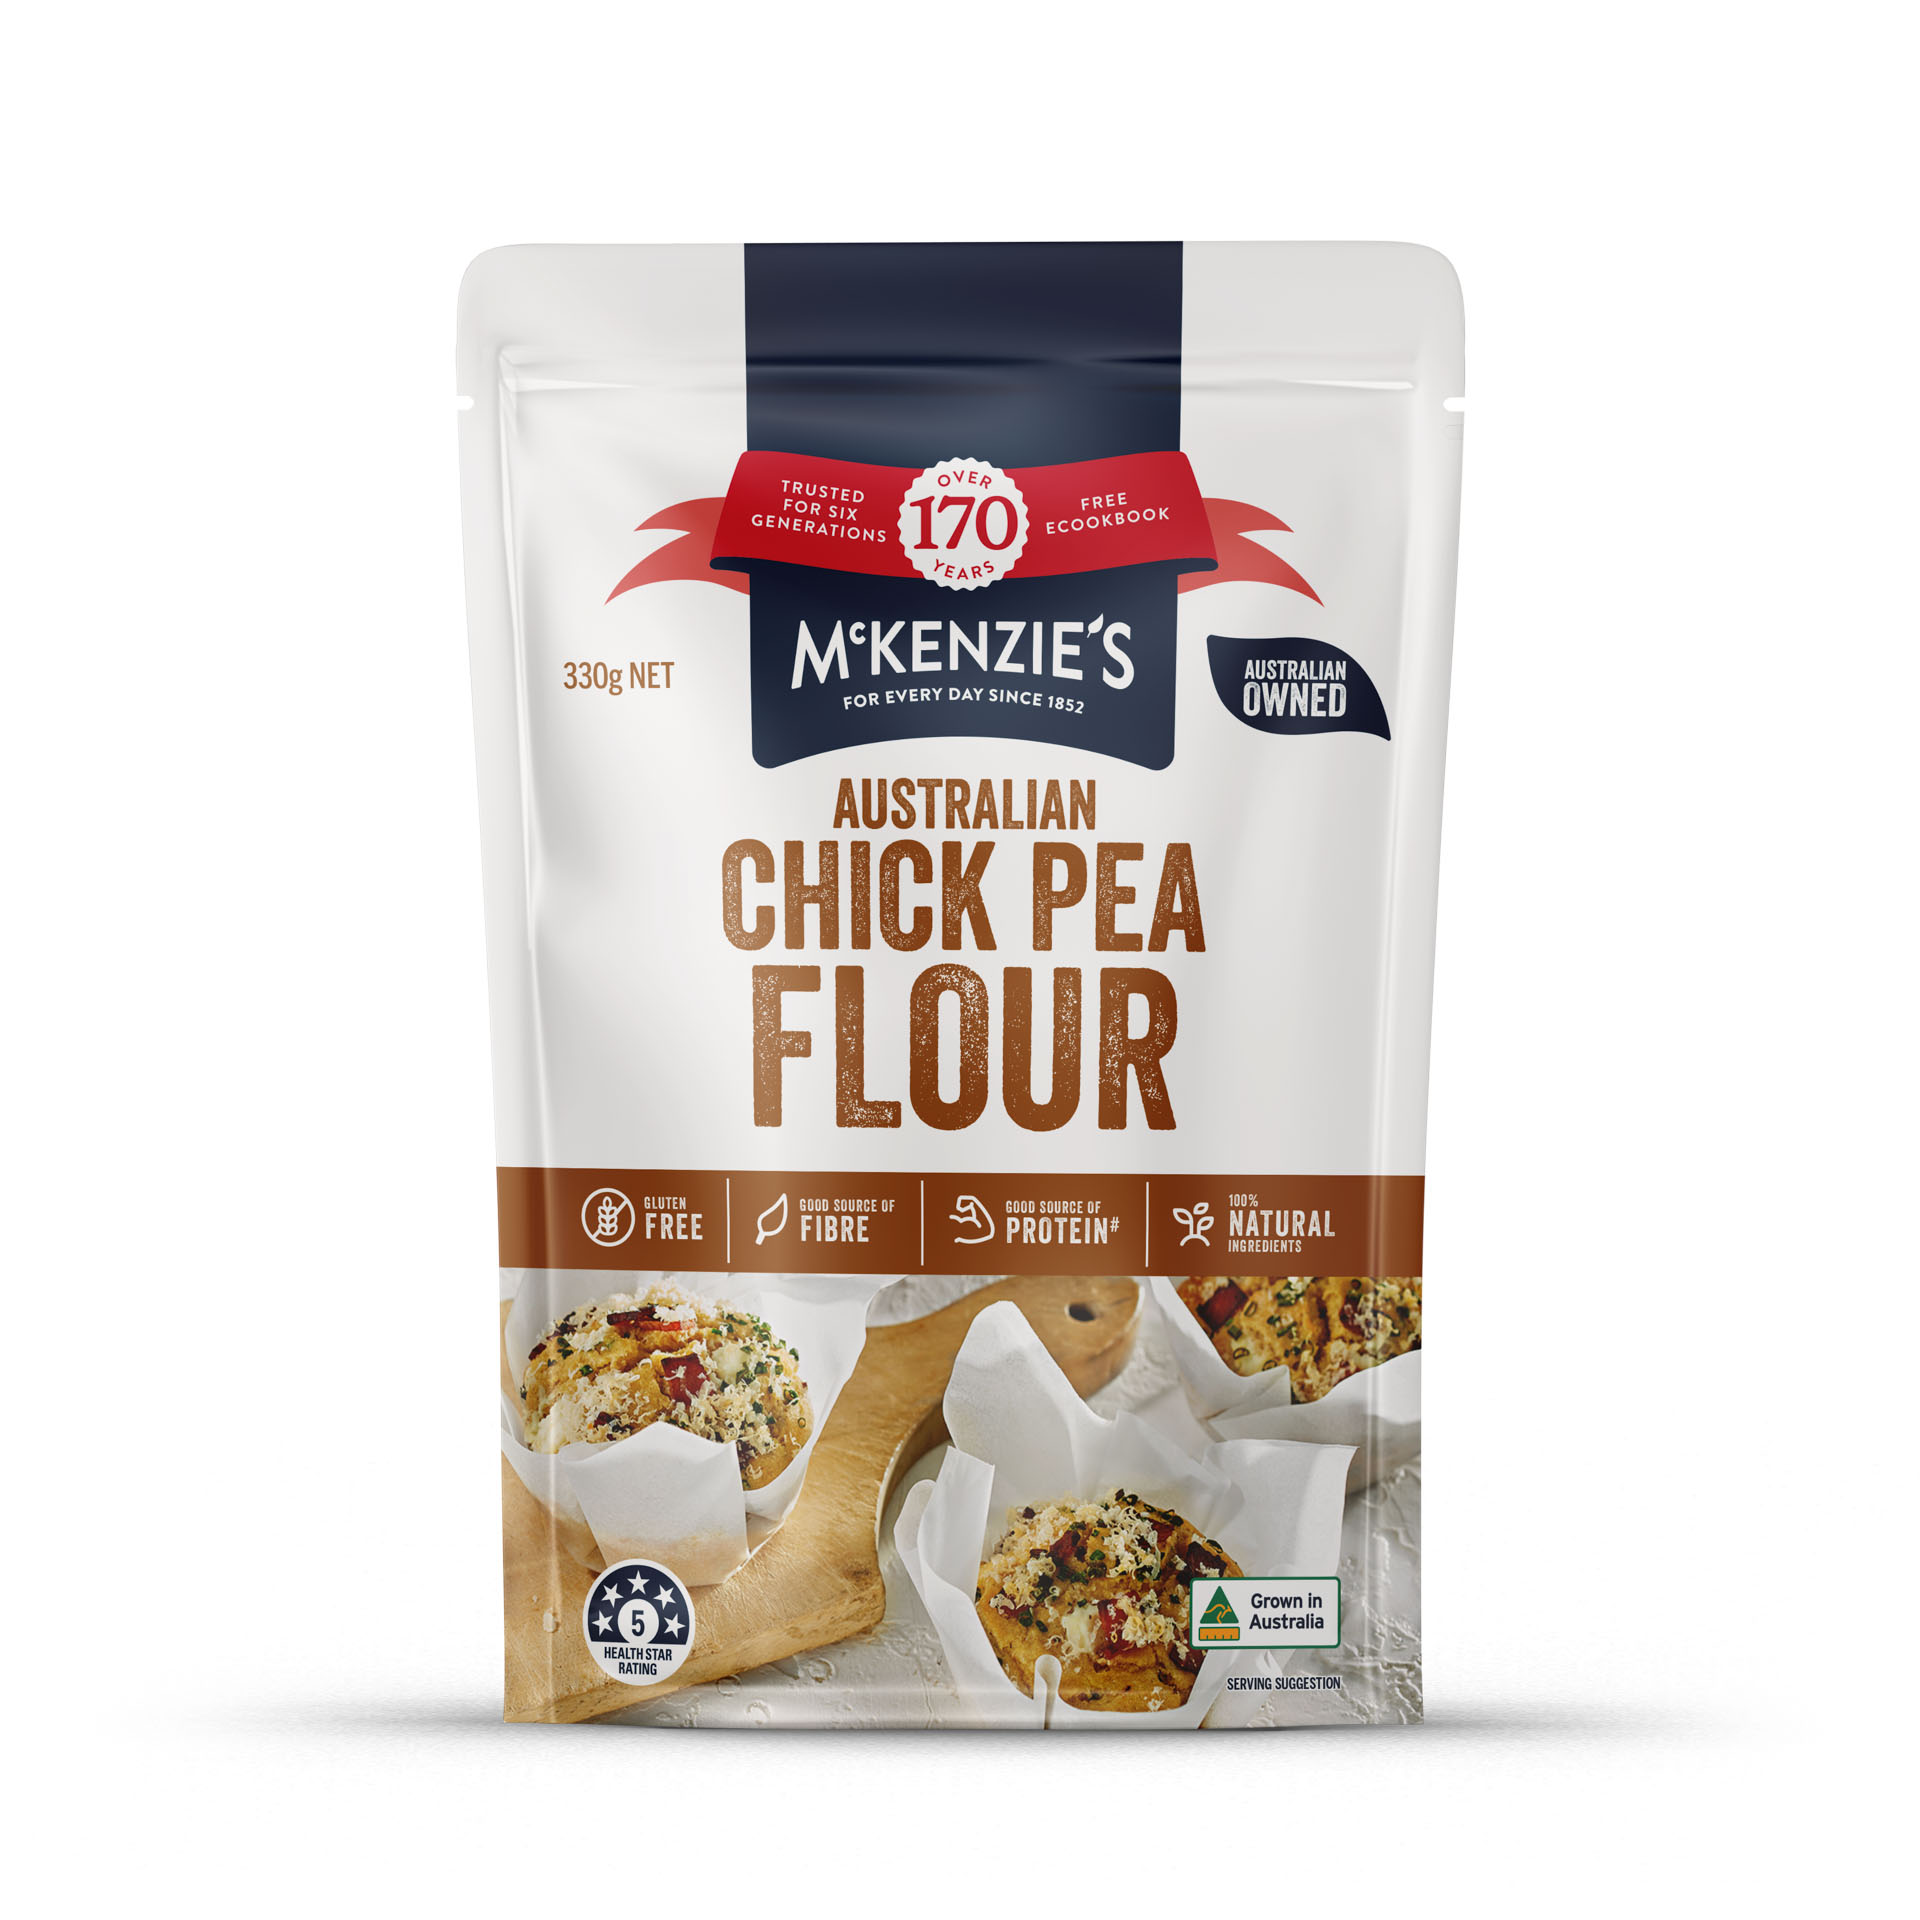 Product photo of McKenzie's Chick Pea Flour